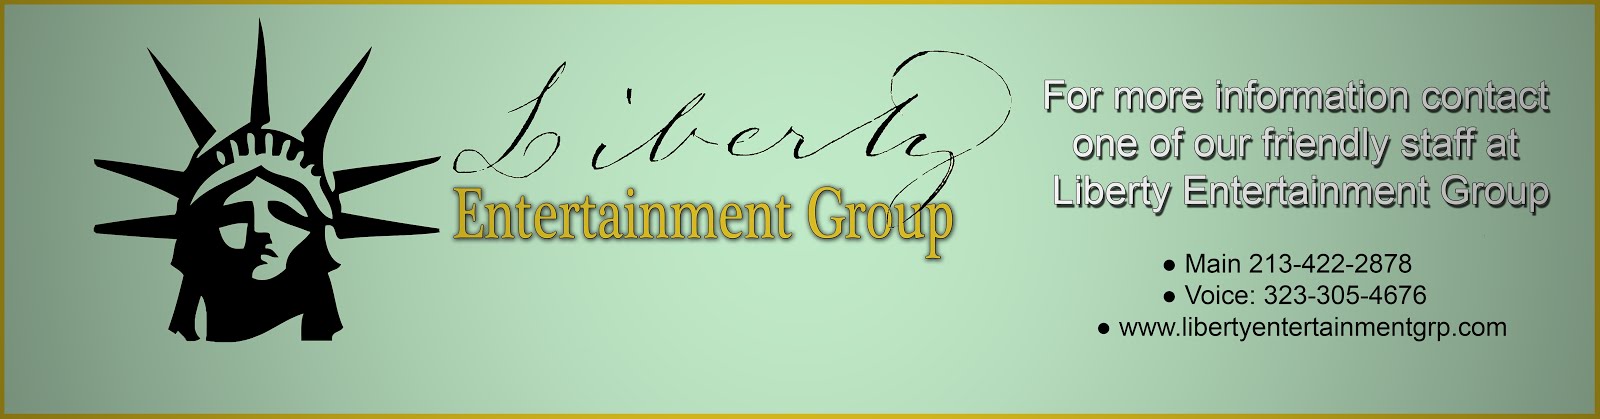 Contact Liberty Entertainment Group